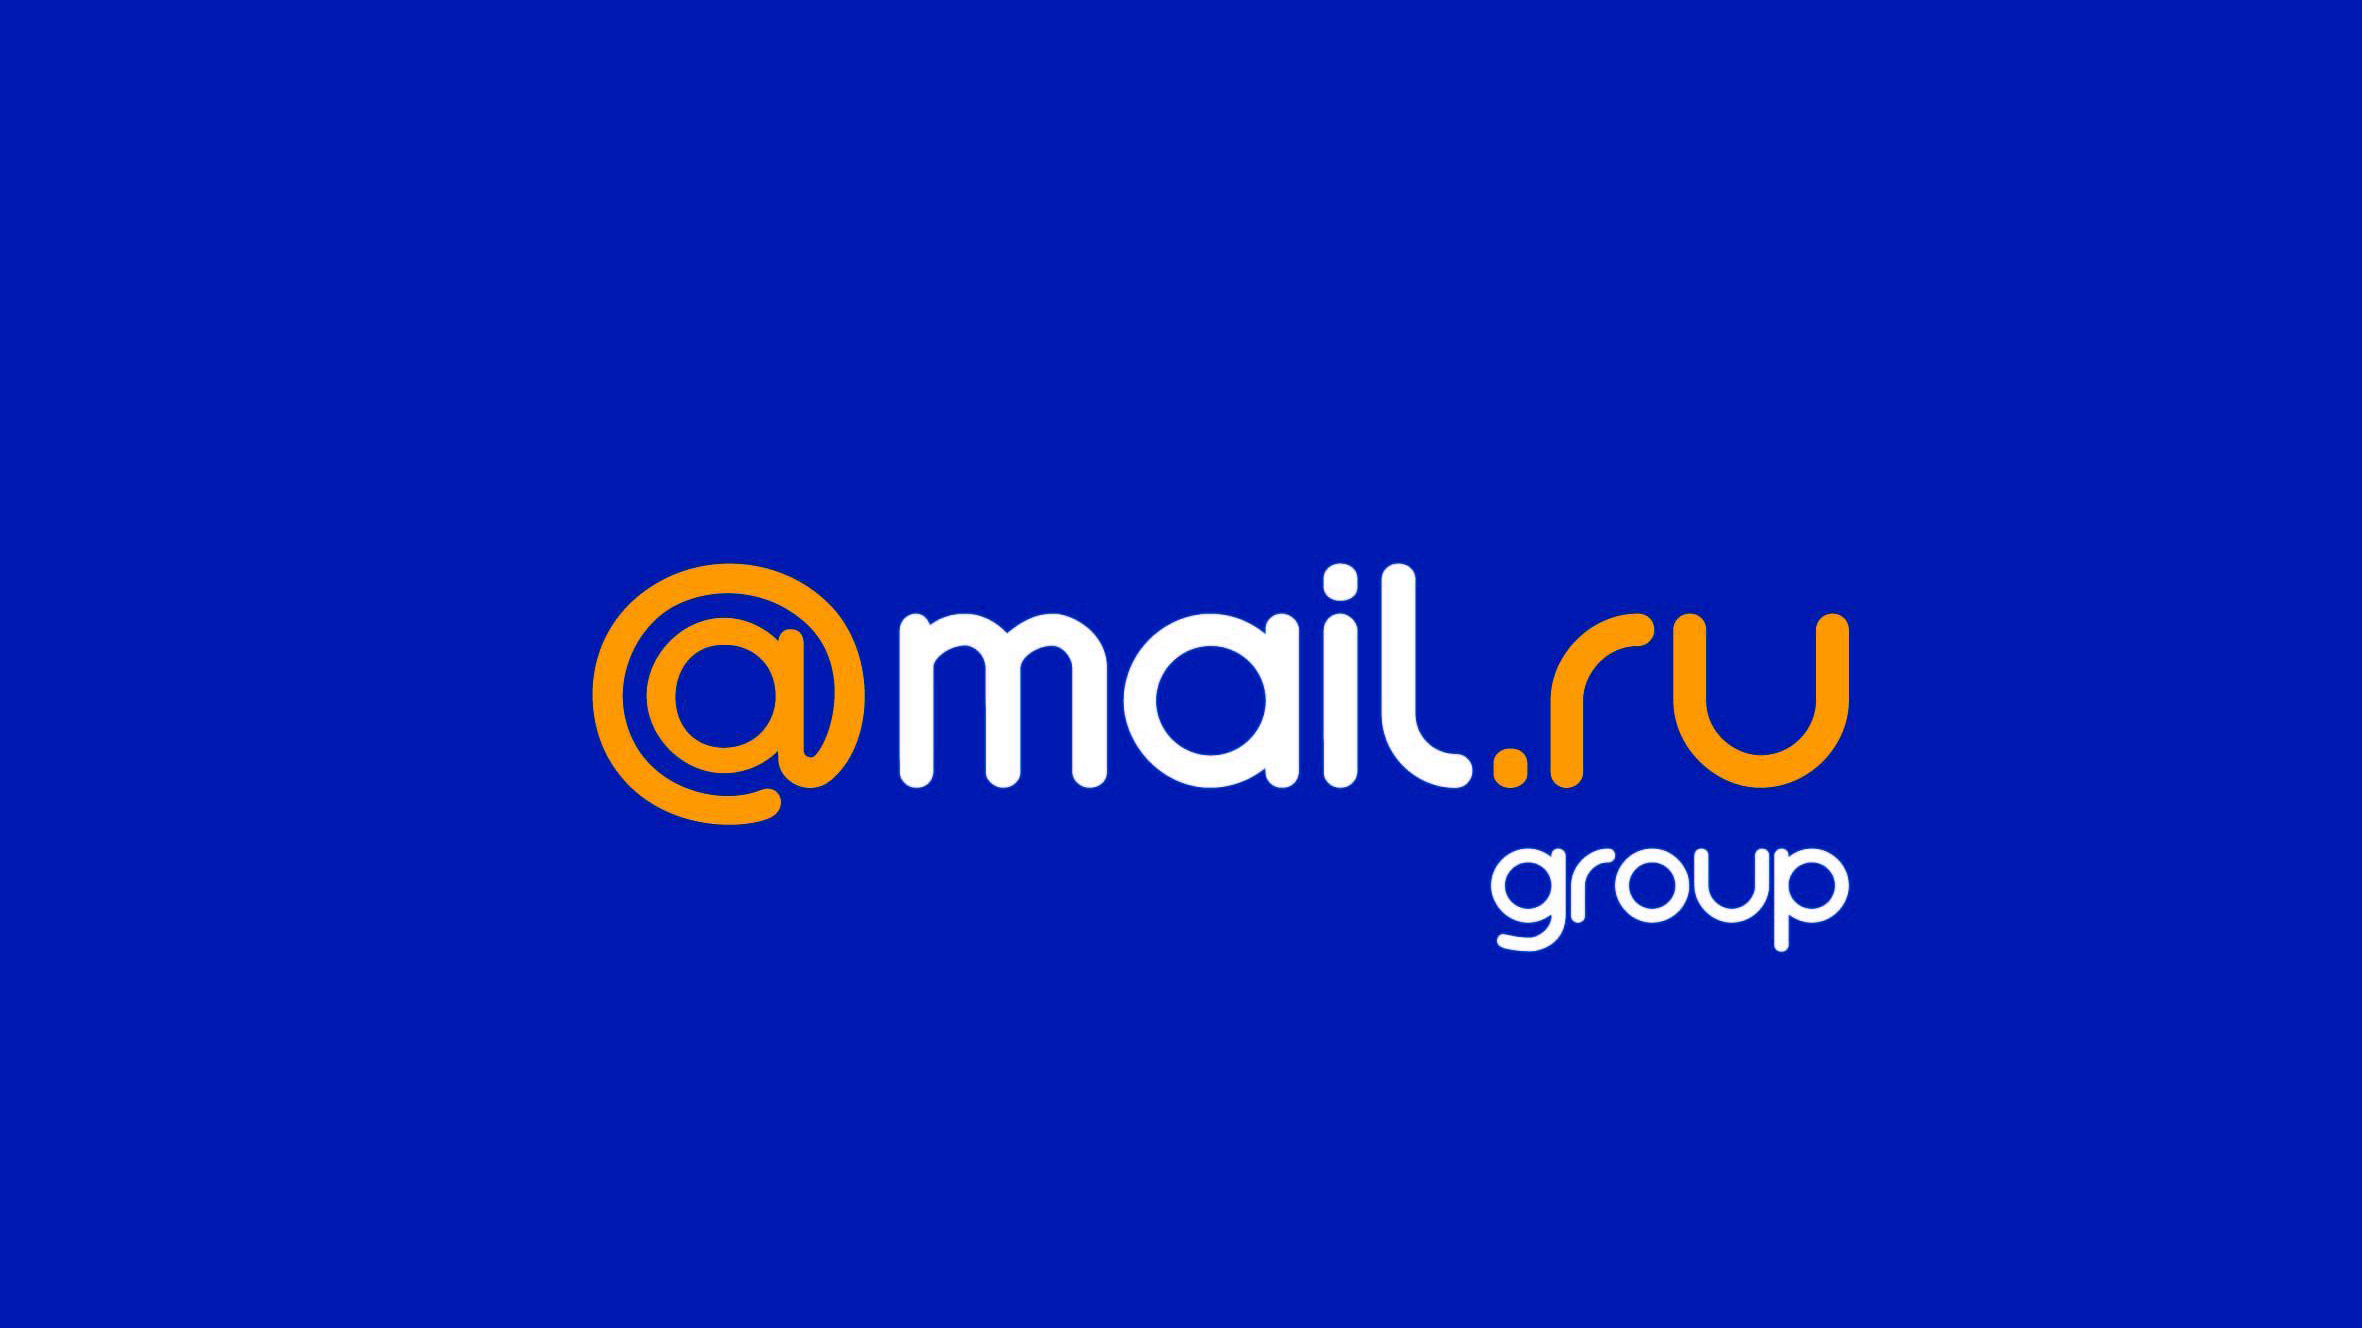 Khv mail ru. Mail.ru Group логотип. Почта майл ру. Логотип почты майл ру.